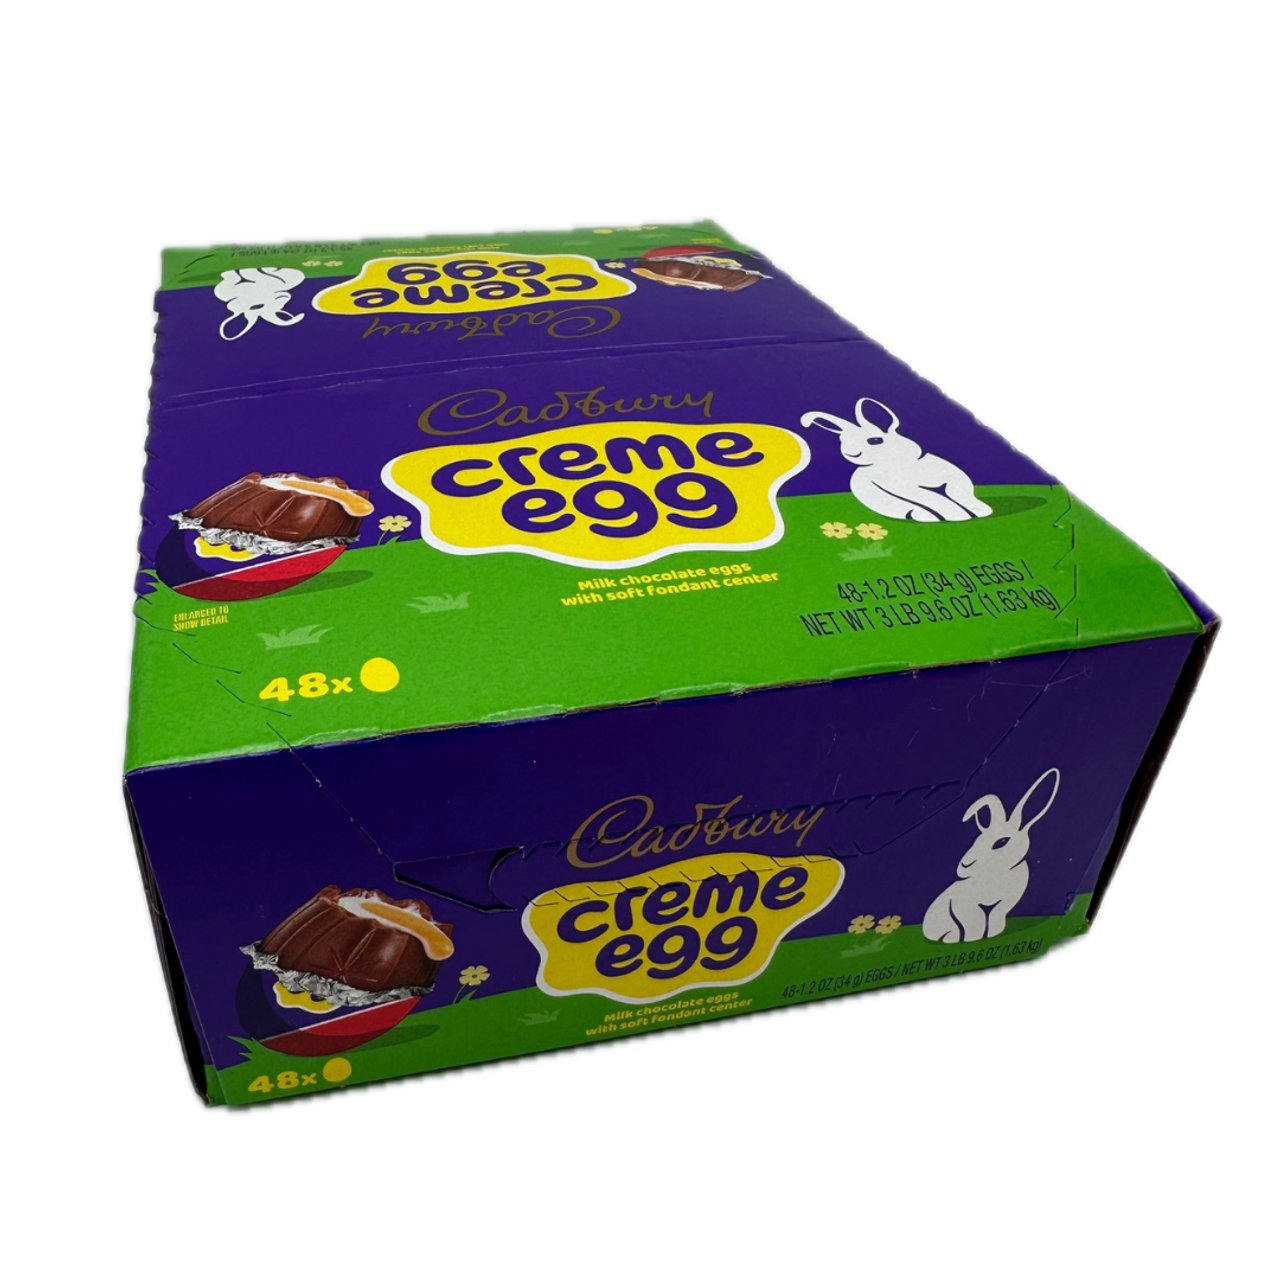 CADBURY CHOCOLATE CREME EGG Milk Chocolate Eggs, 1.2 oz, 4 count box